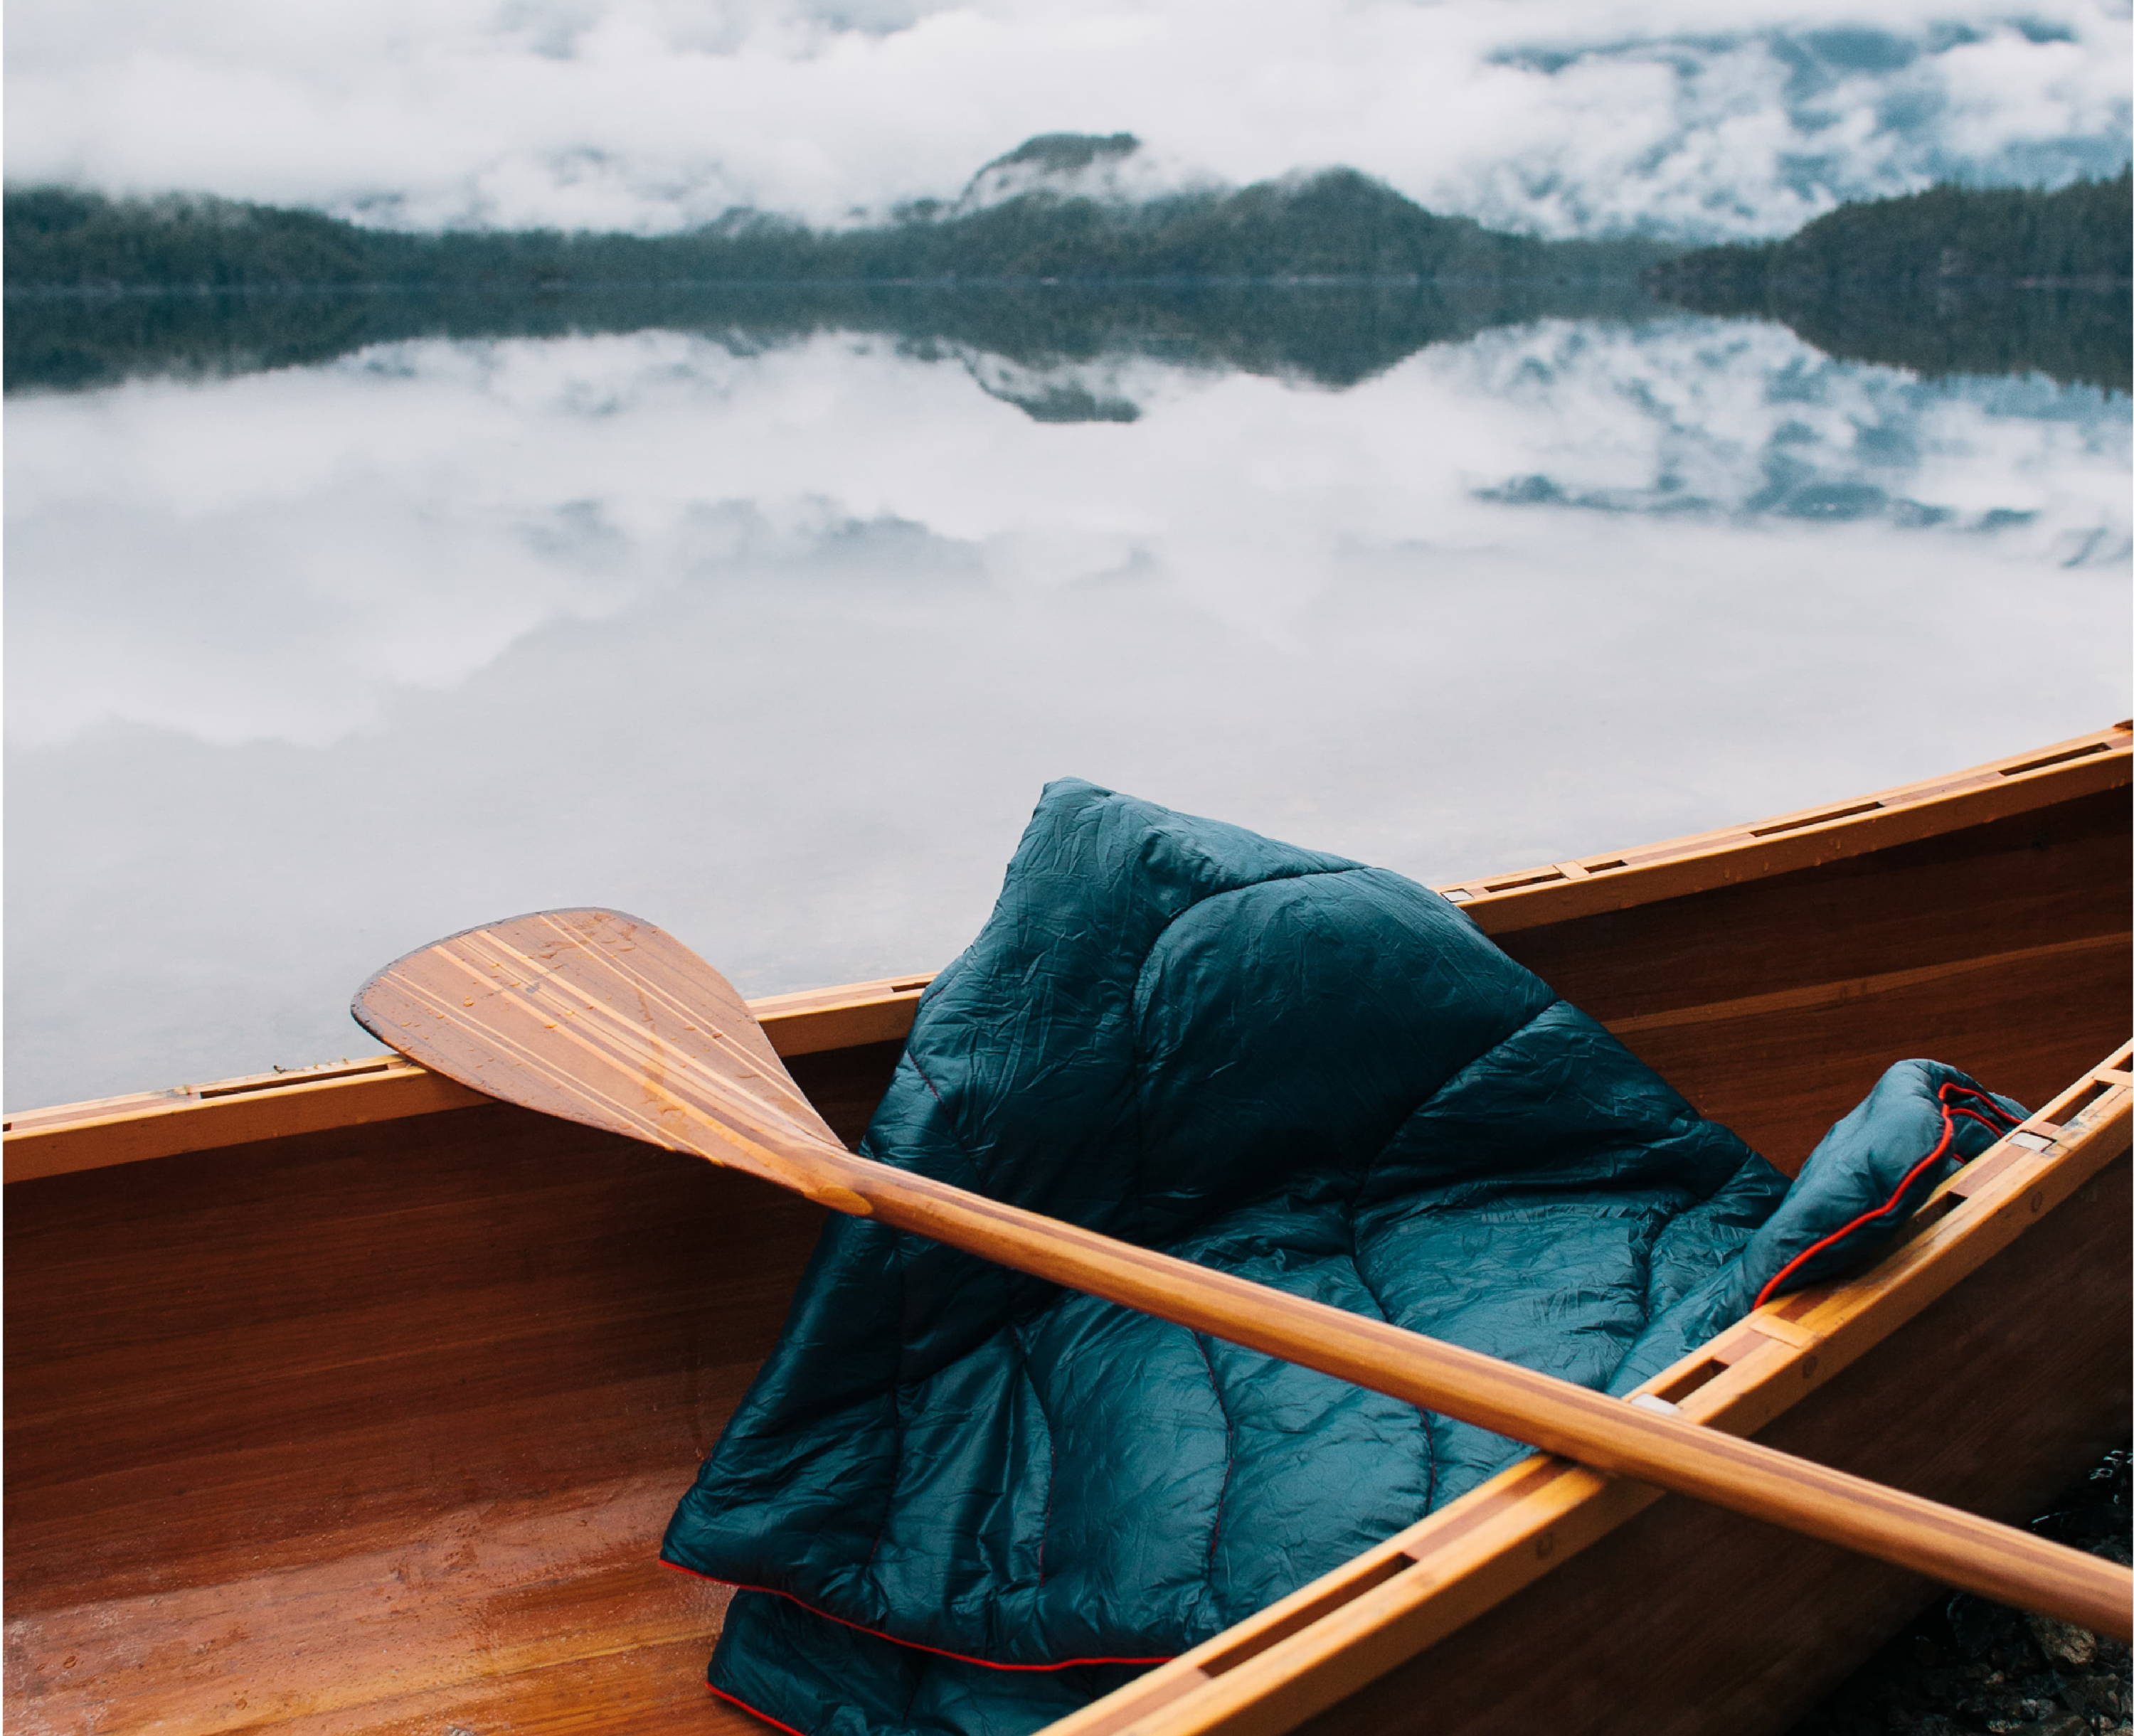 Rumpl Original Puffy Blanket In a Canoe floating on a lake